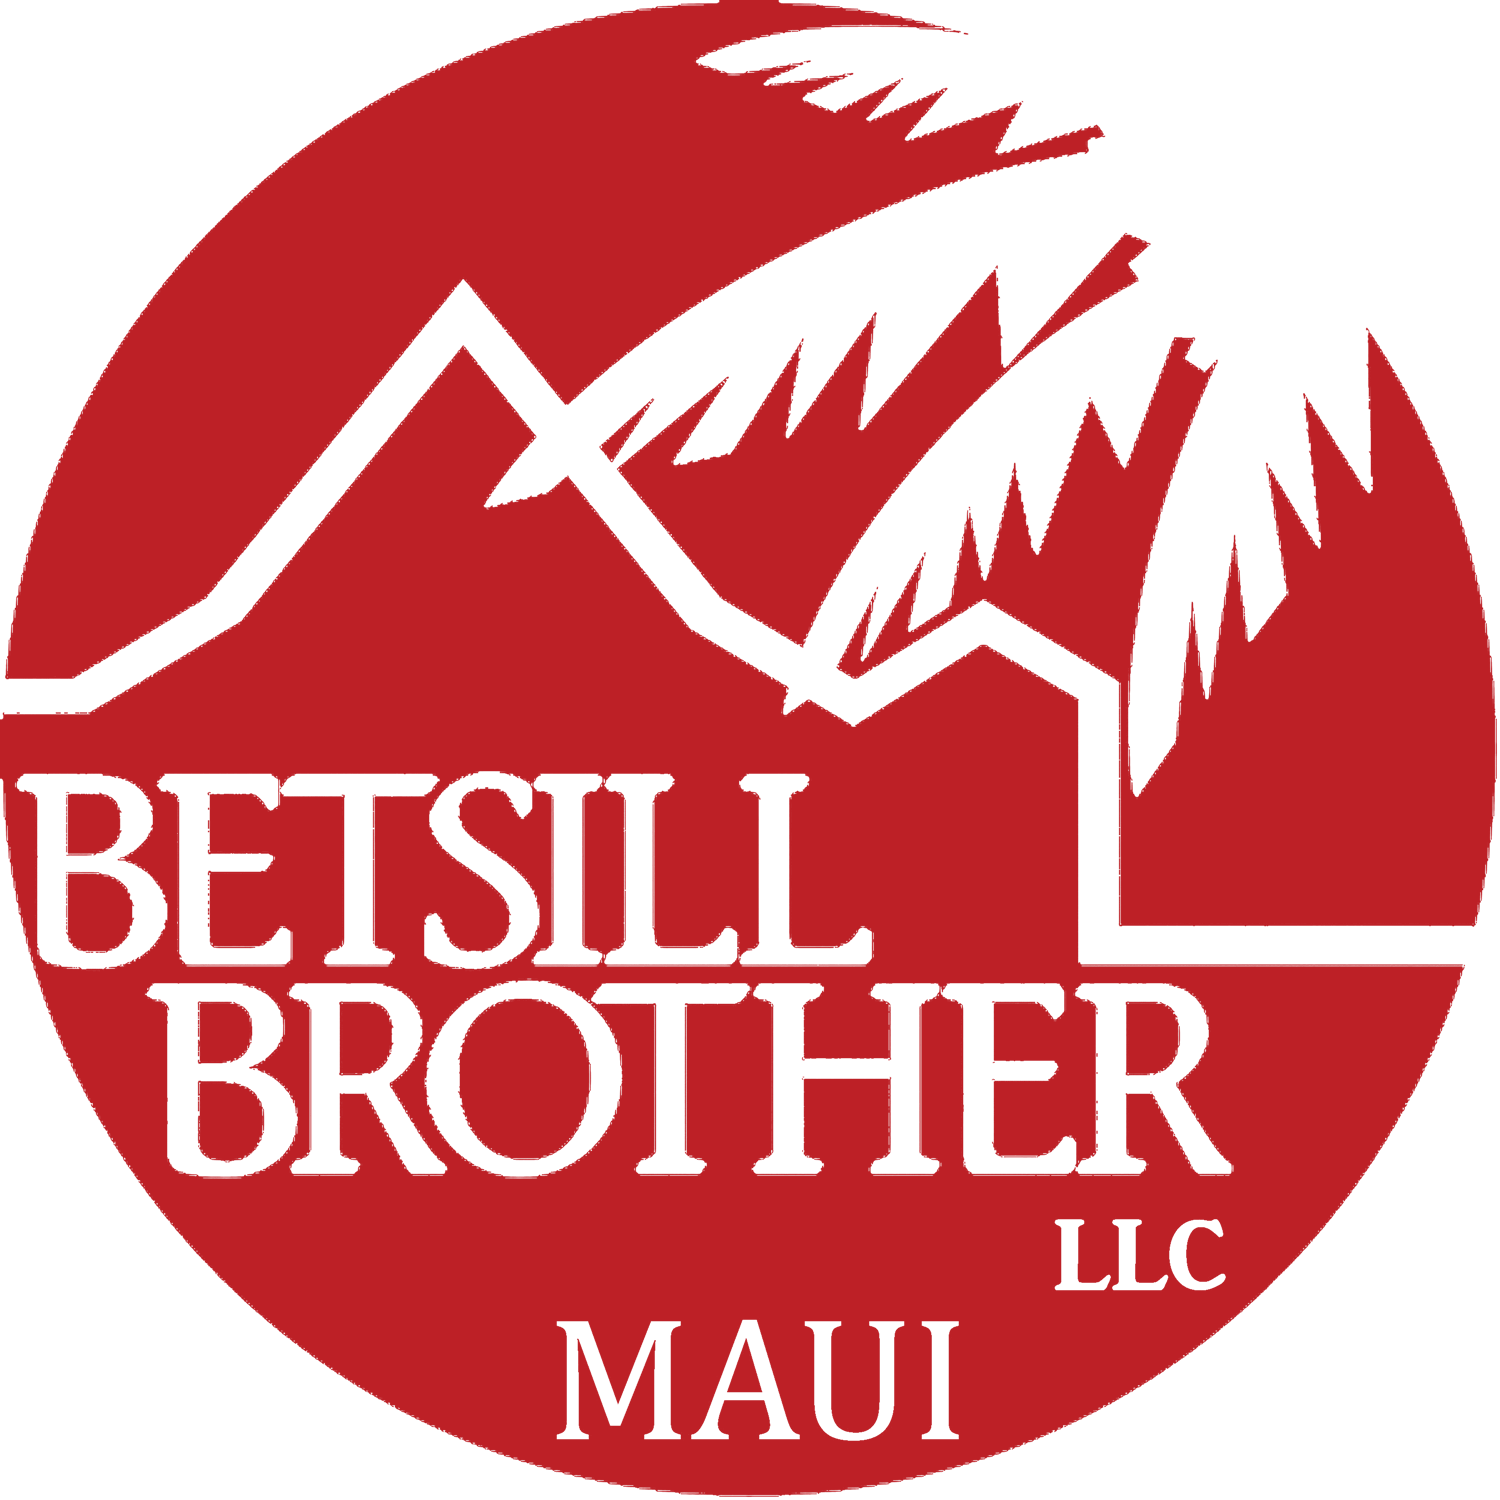 Betsill Brother Construction